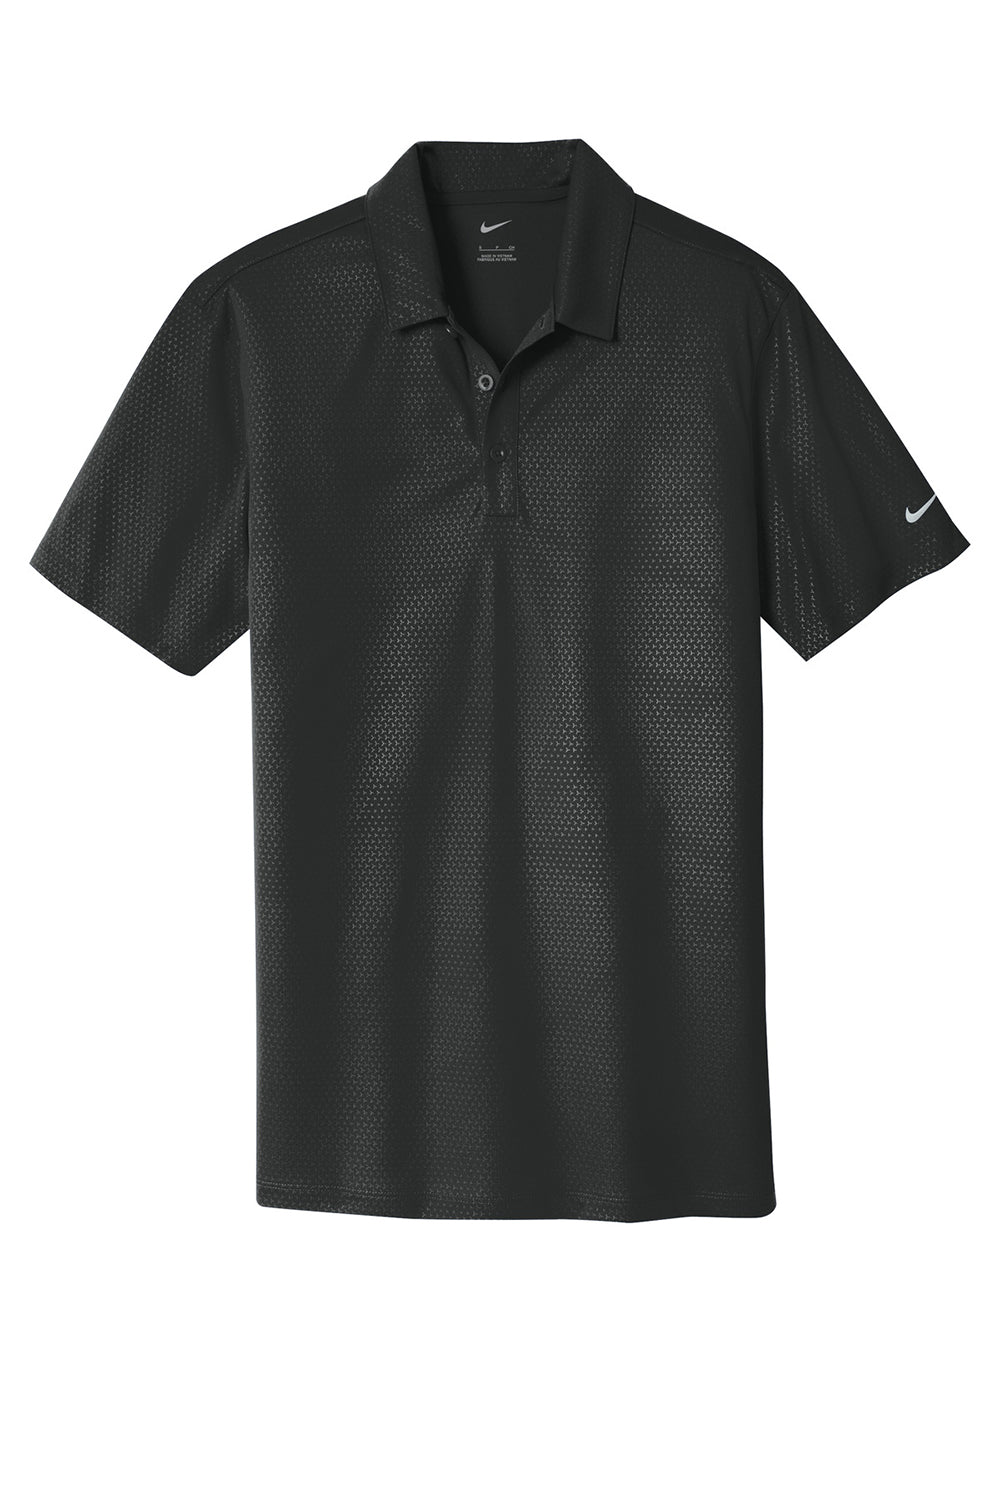 Nike 838964 Mens Dri-Fit Moisture Wicking Short Sleeve Polo Shirt Black Flat Front